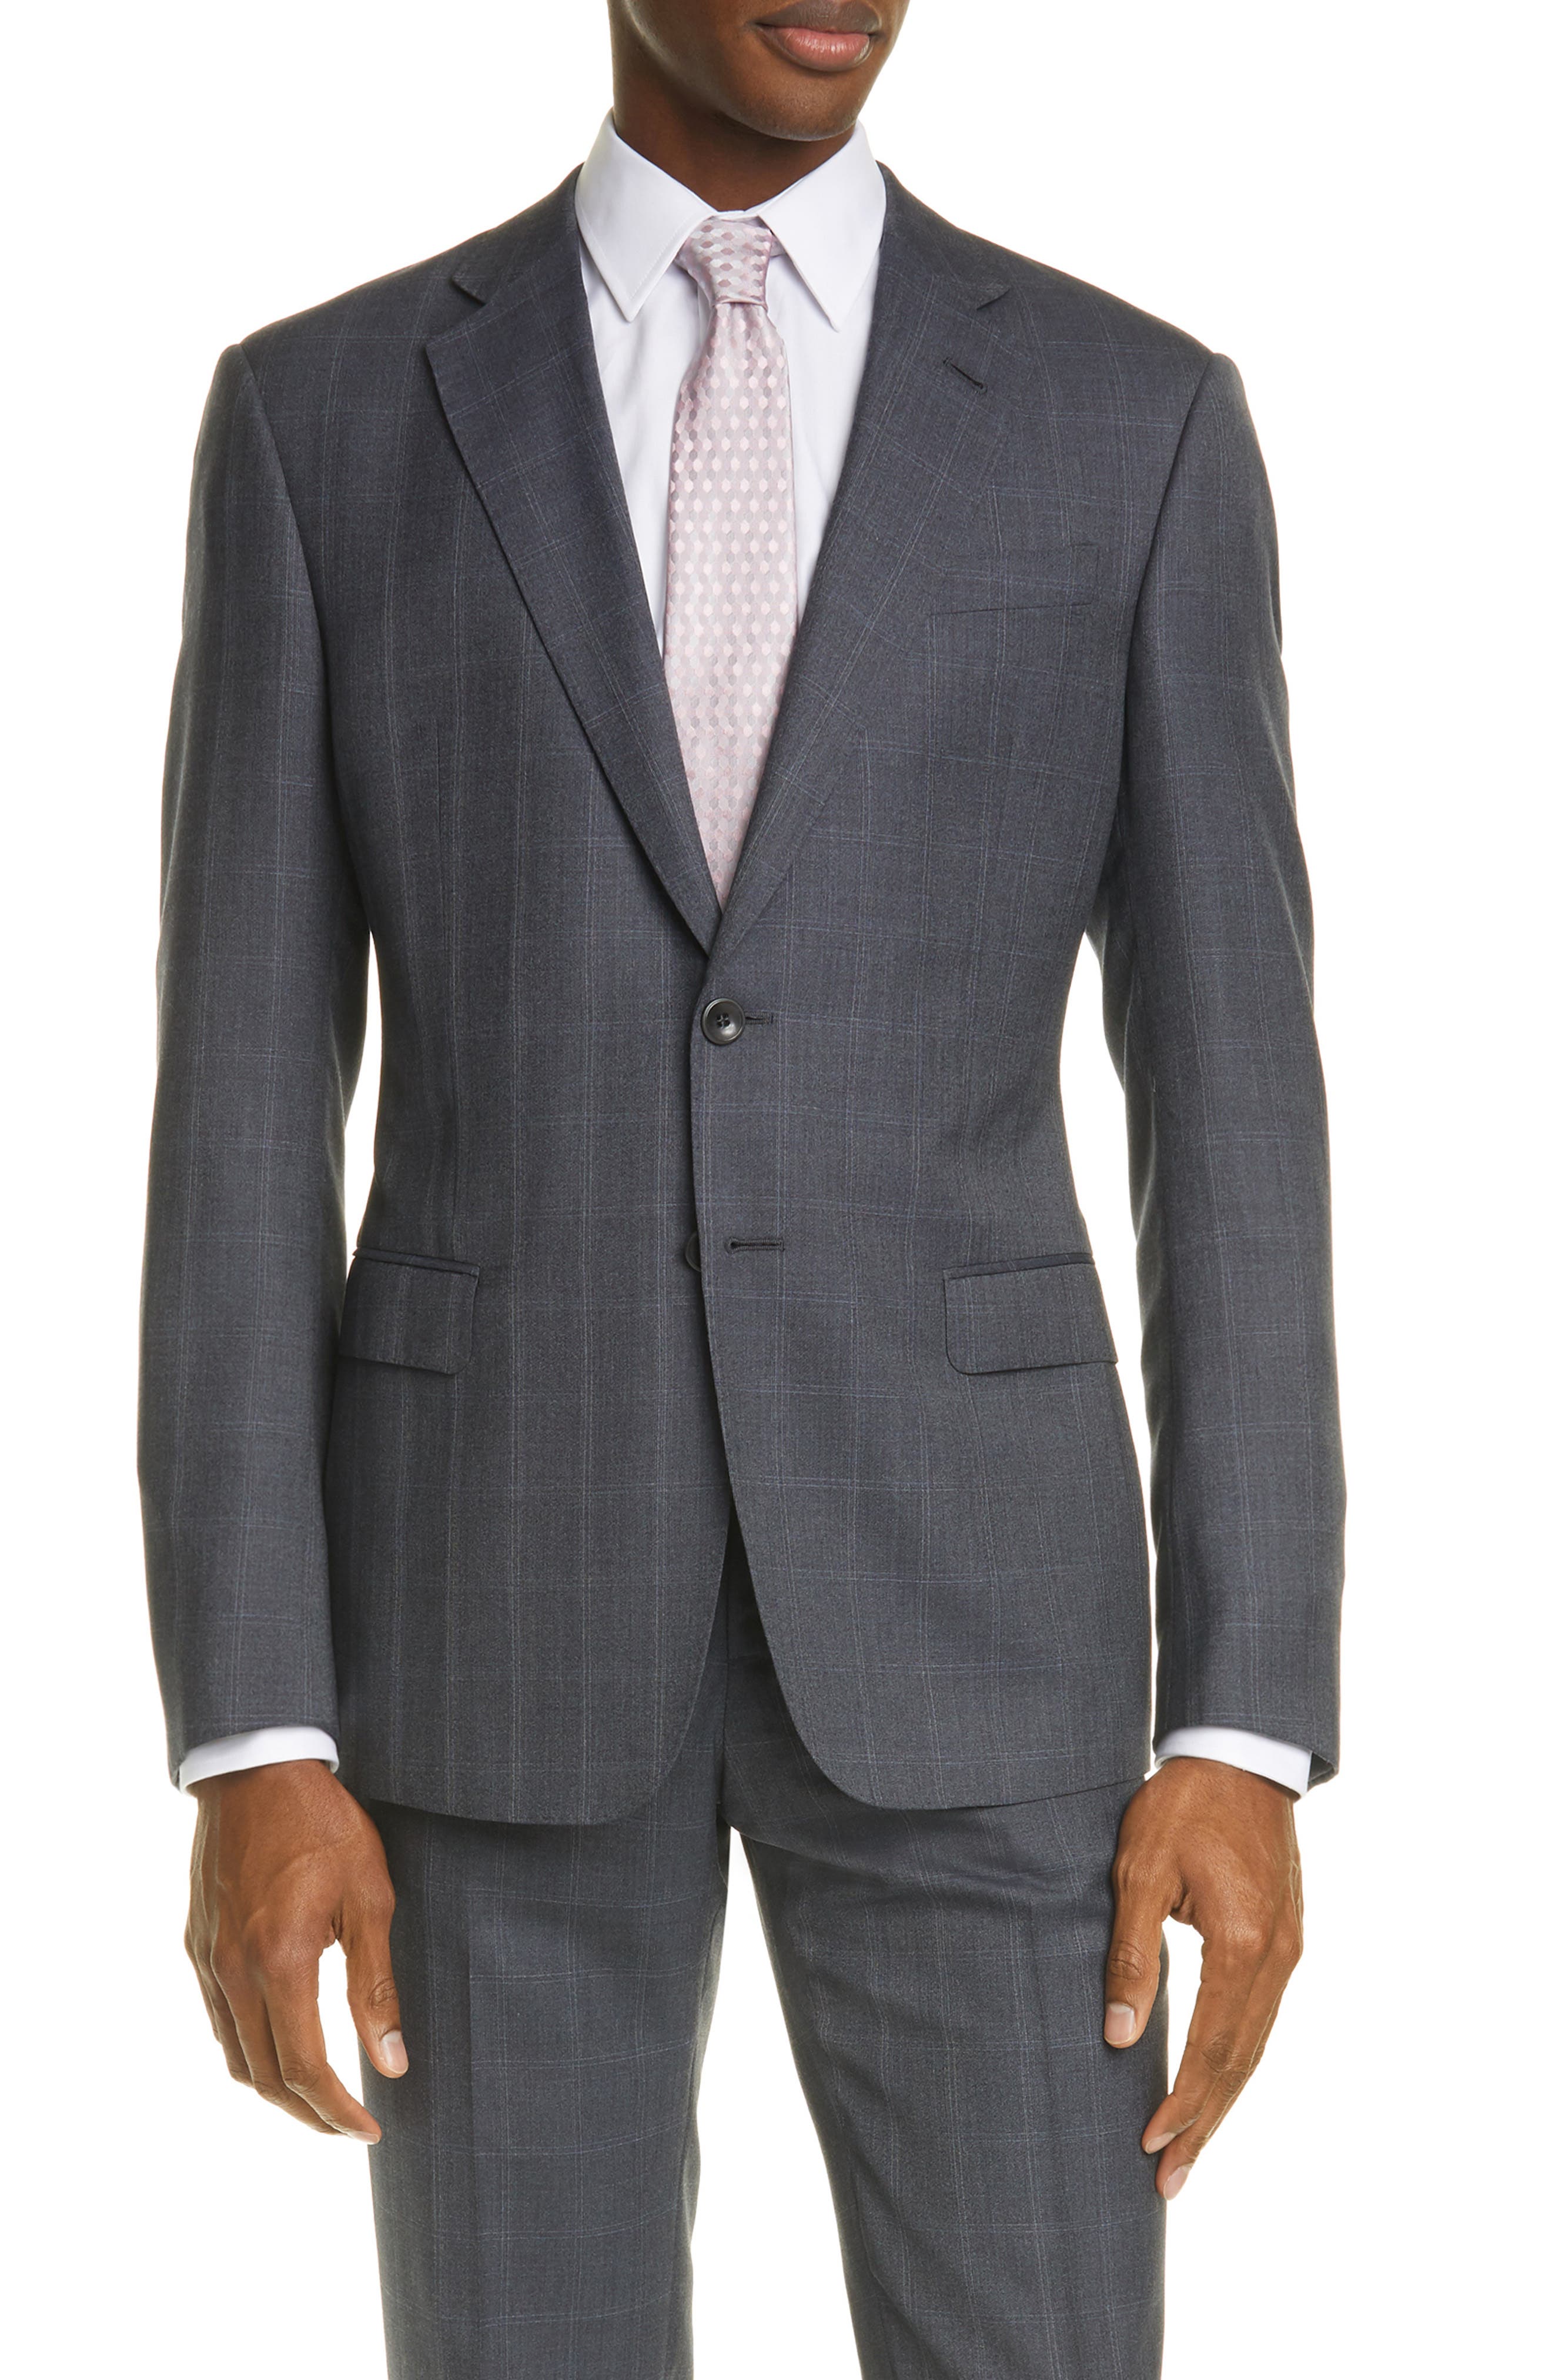 gray armani suit